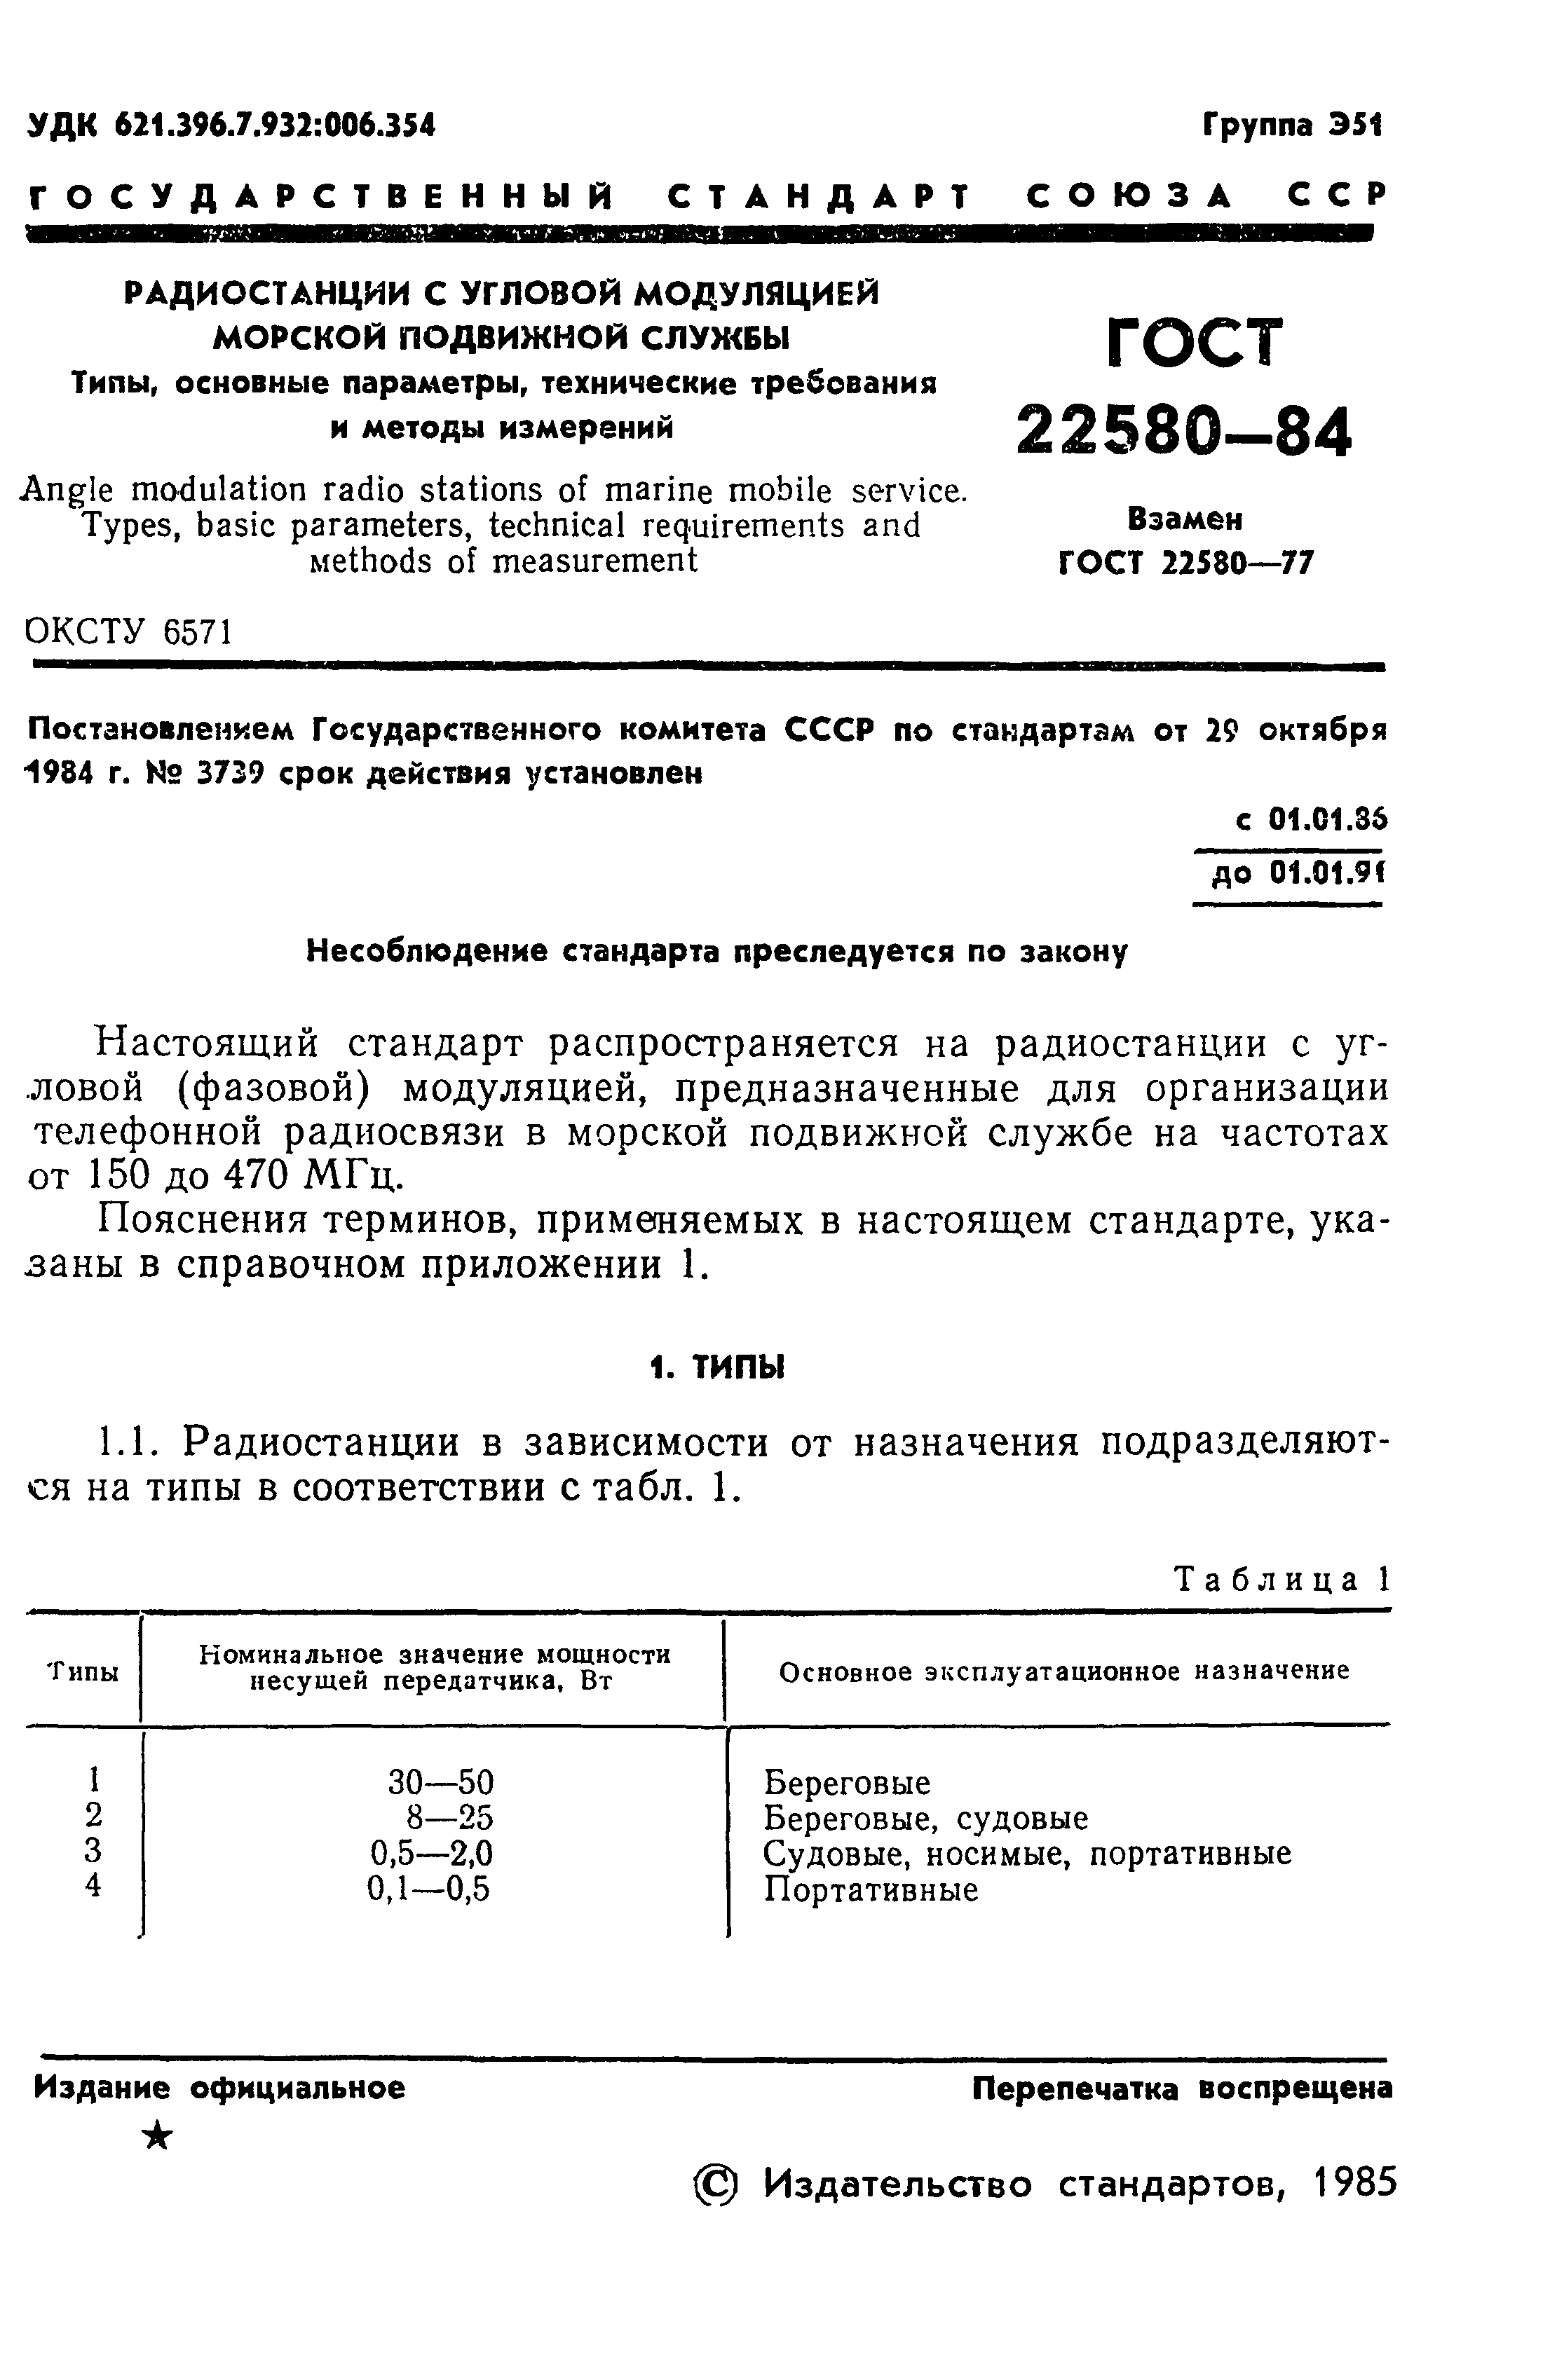 ГОСТ 22580-84